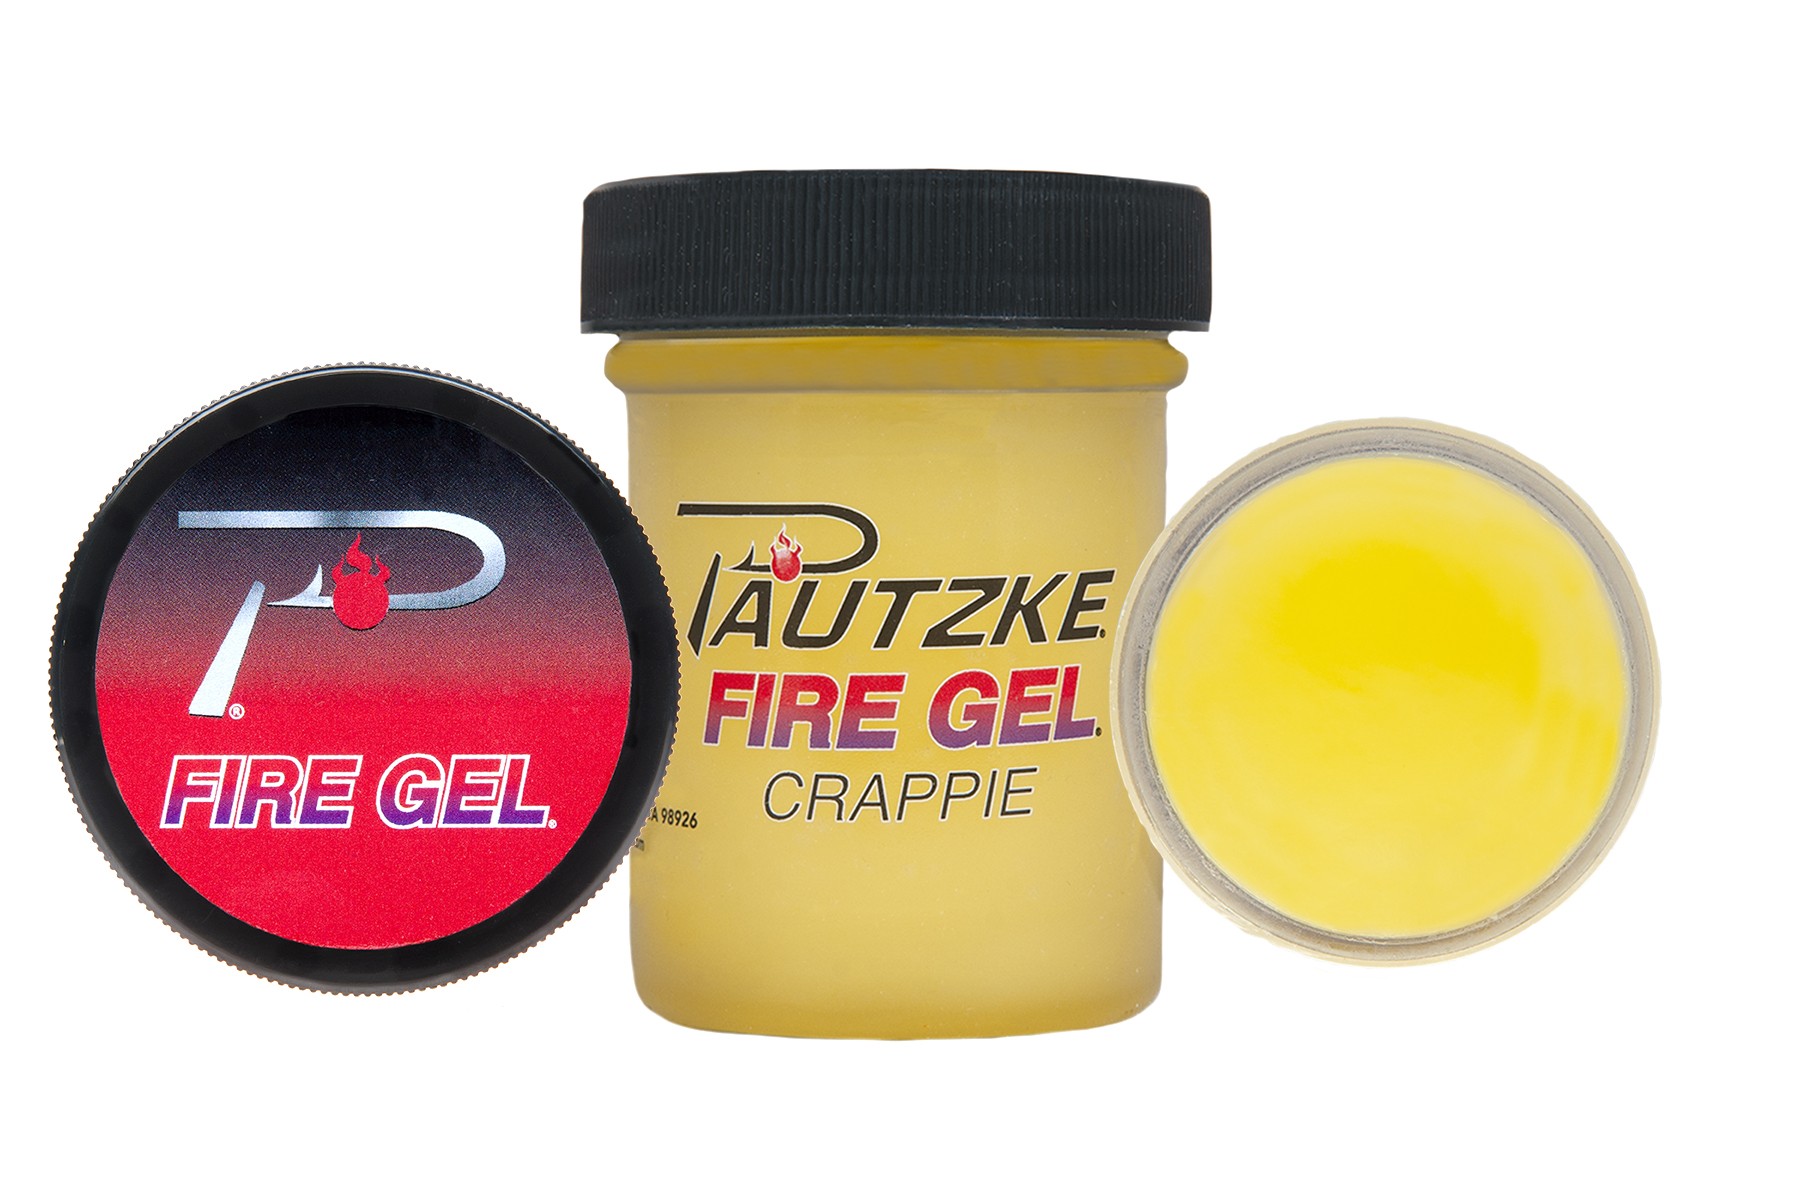 Pautzke Bait Co. Fire Gel Attractant 1.65 oz Freshwater Saltwater